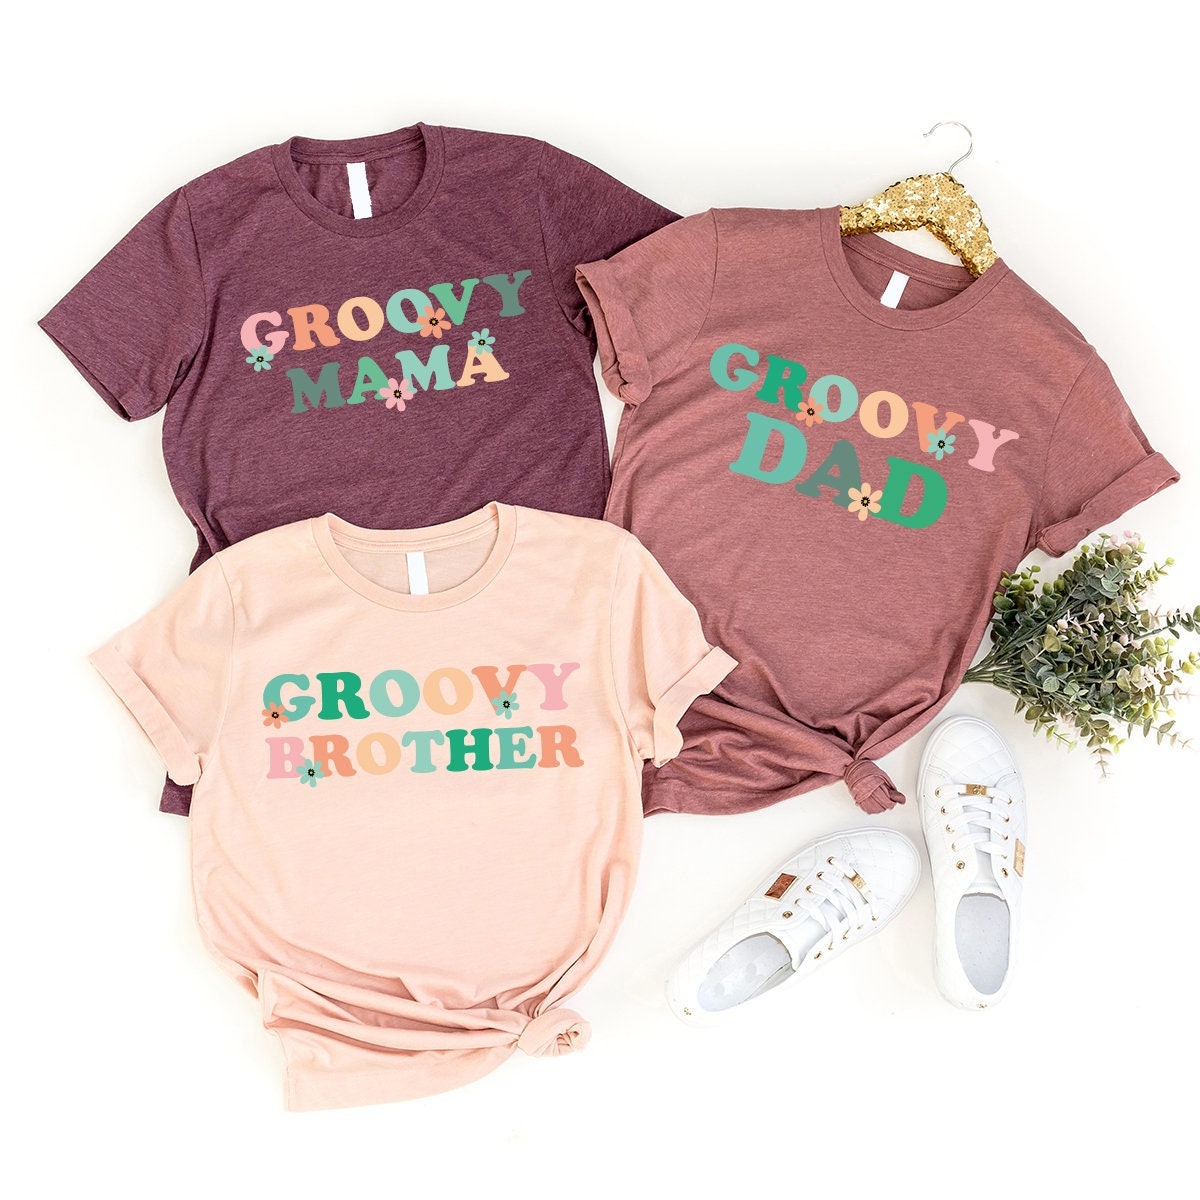 Vtec season infant apparel shirt cute stylish trending baby shower gift jdm 